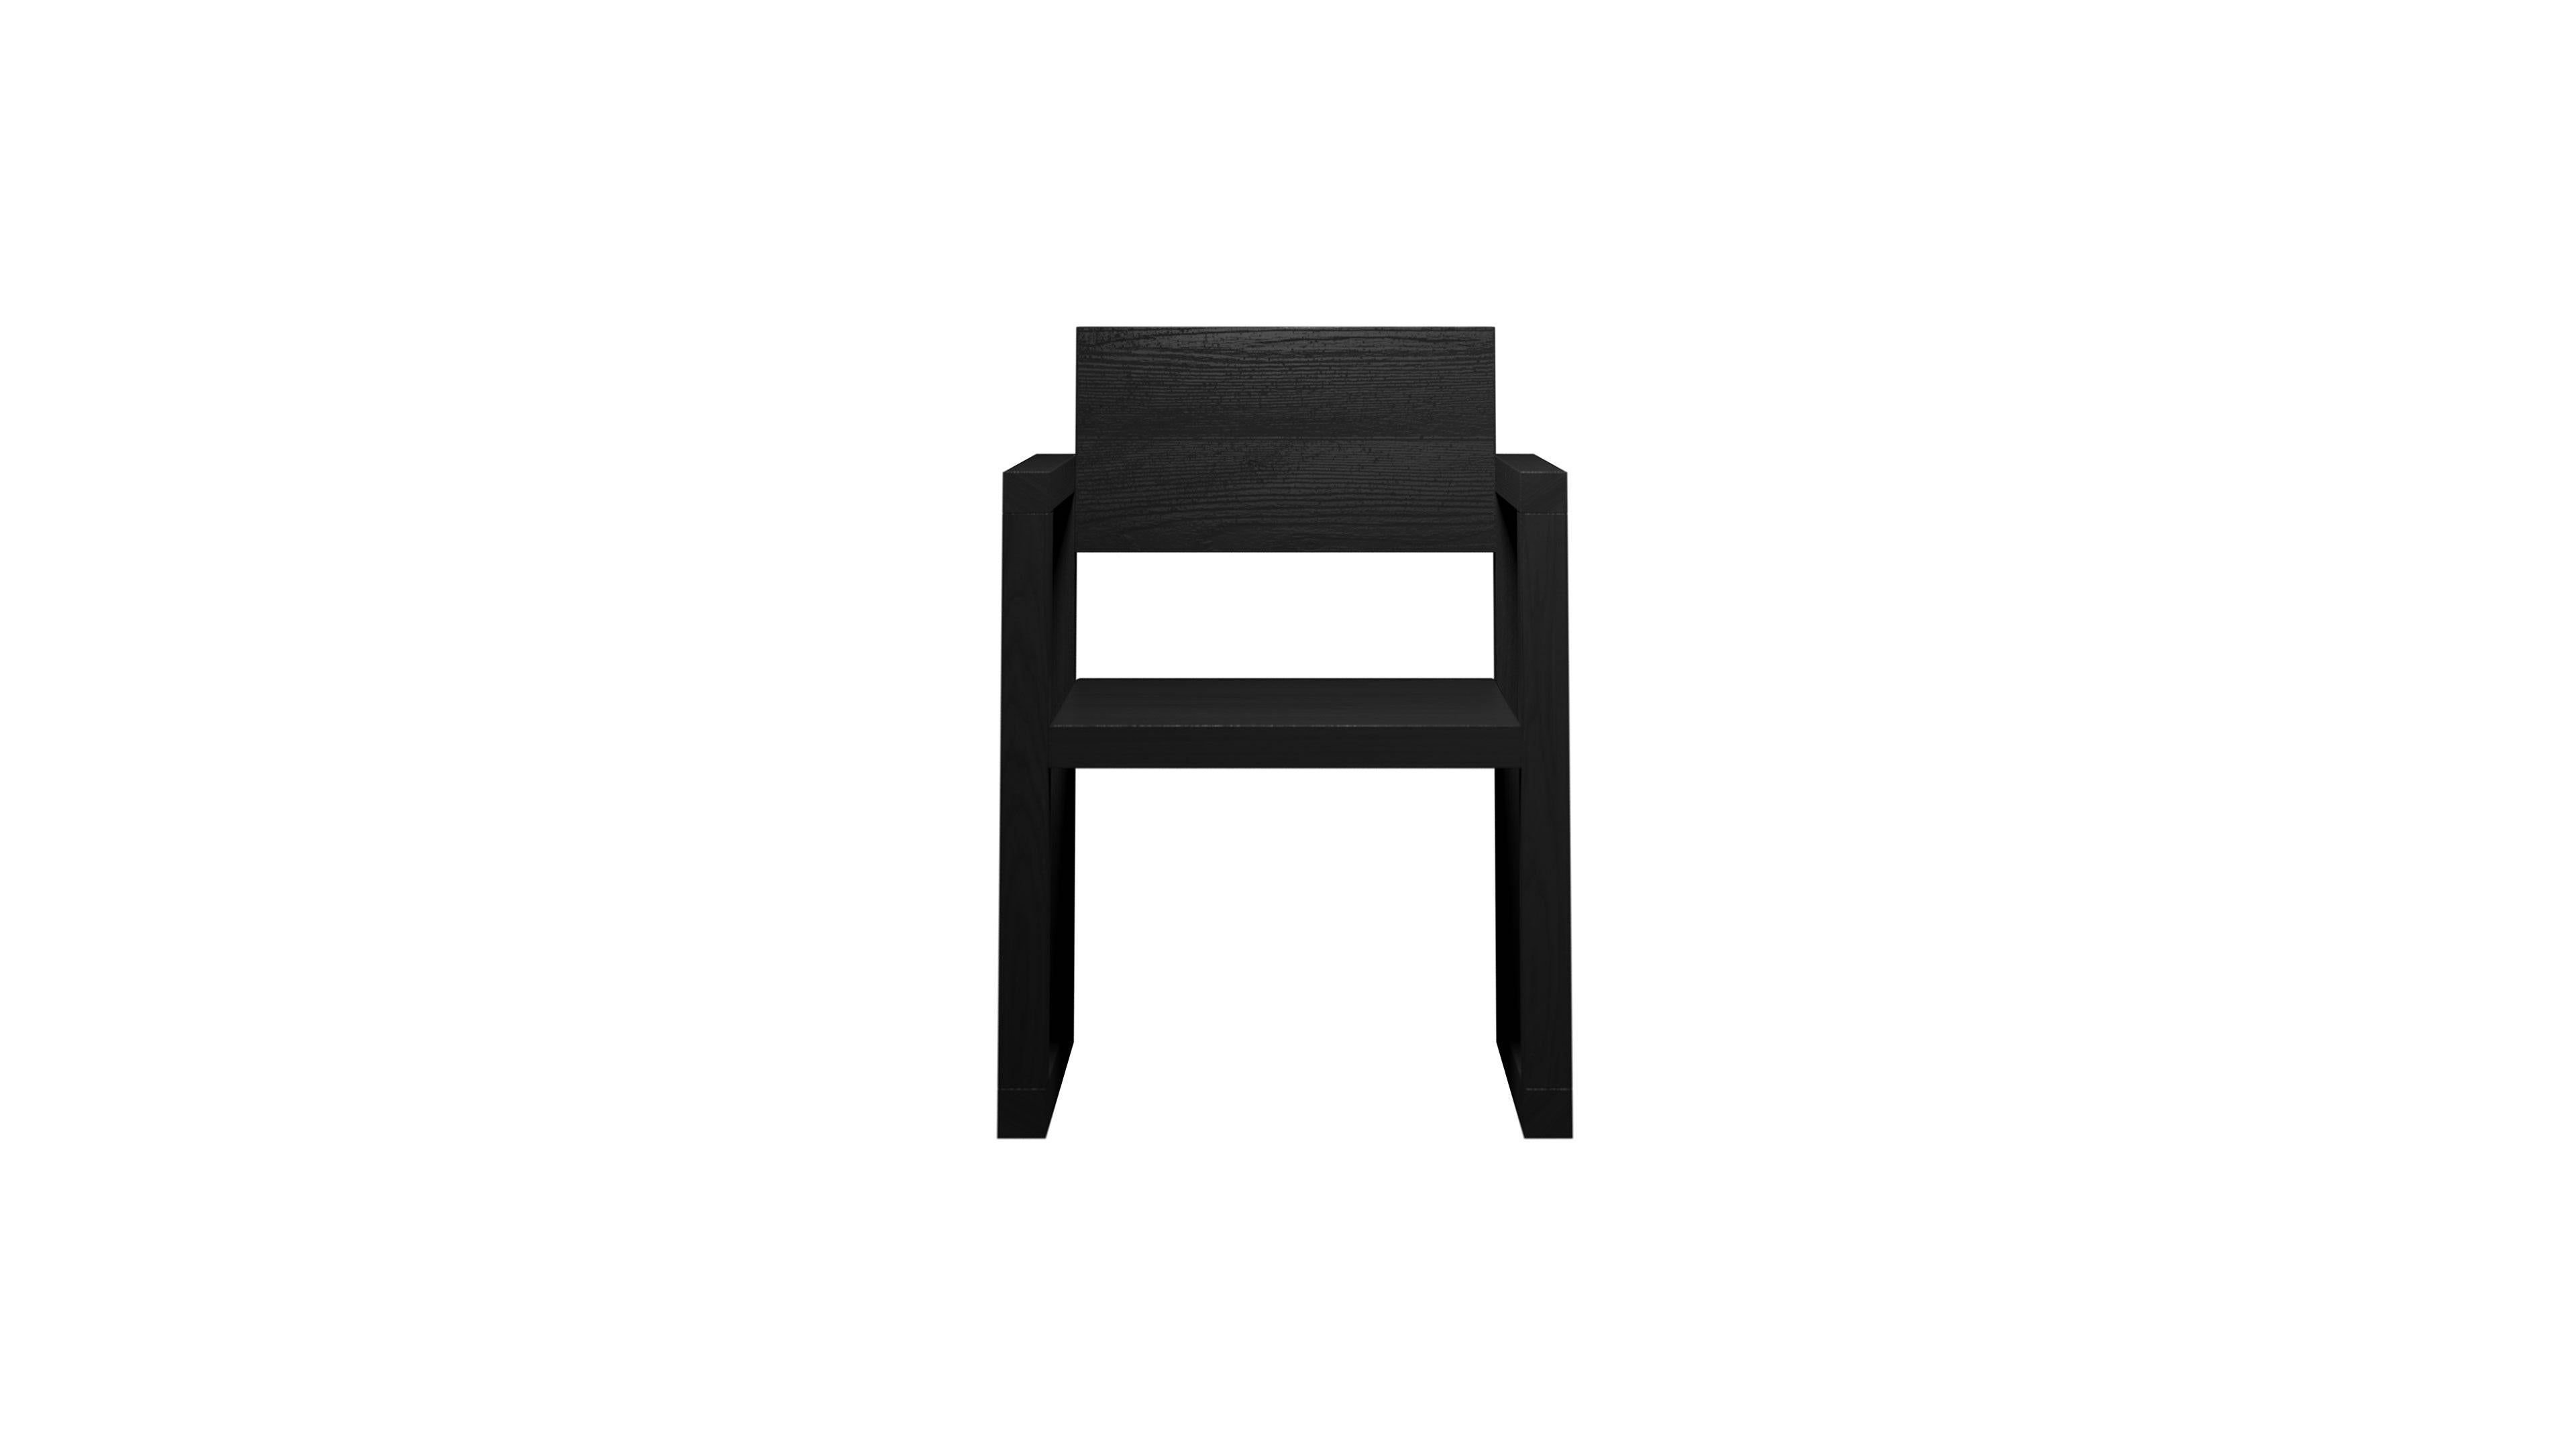 Italic Chair by Haris Fazlani

L 21